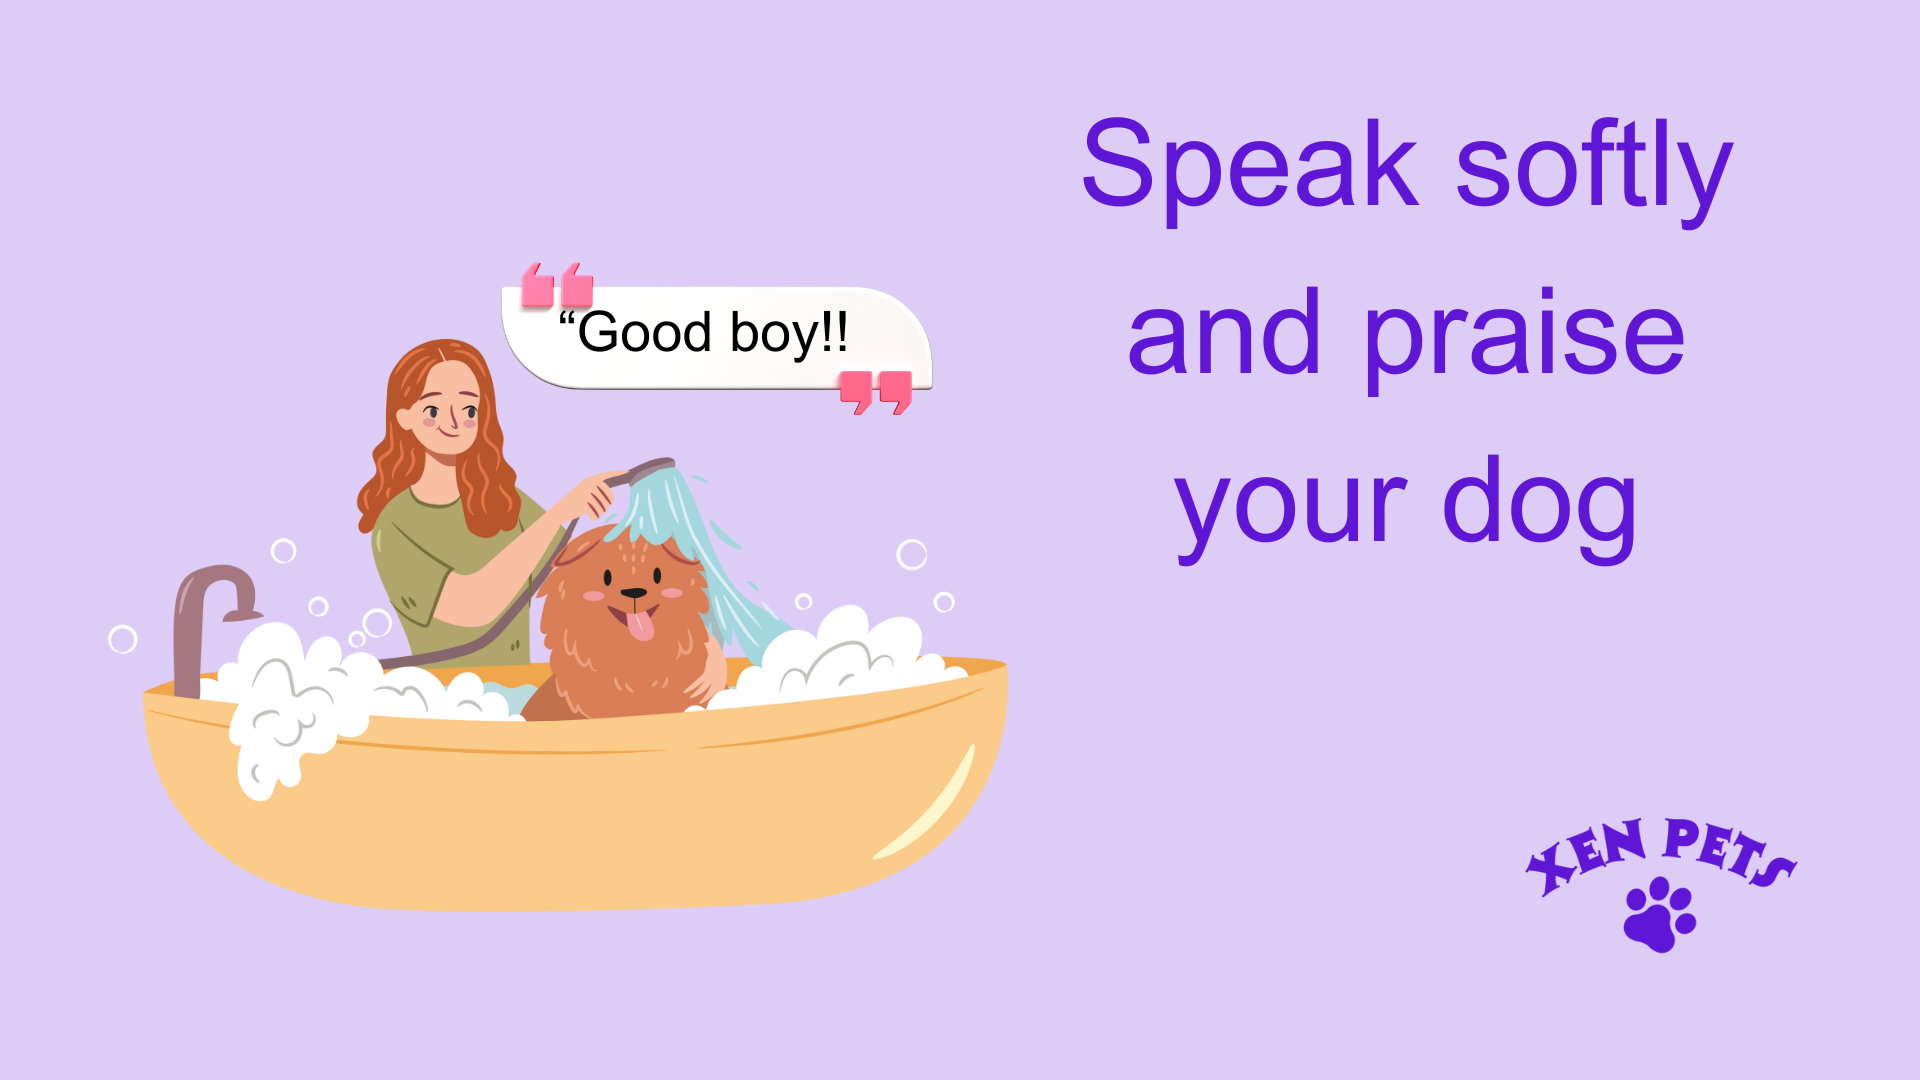 Speak softly and praise your dog